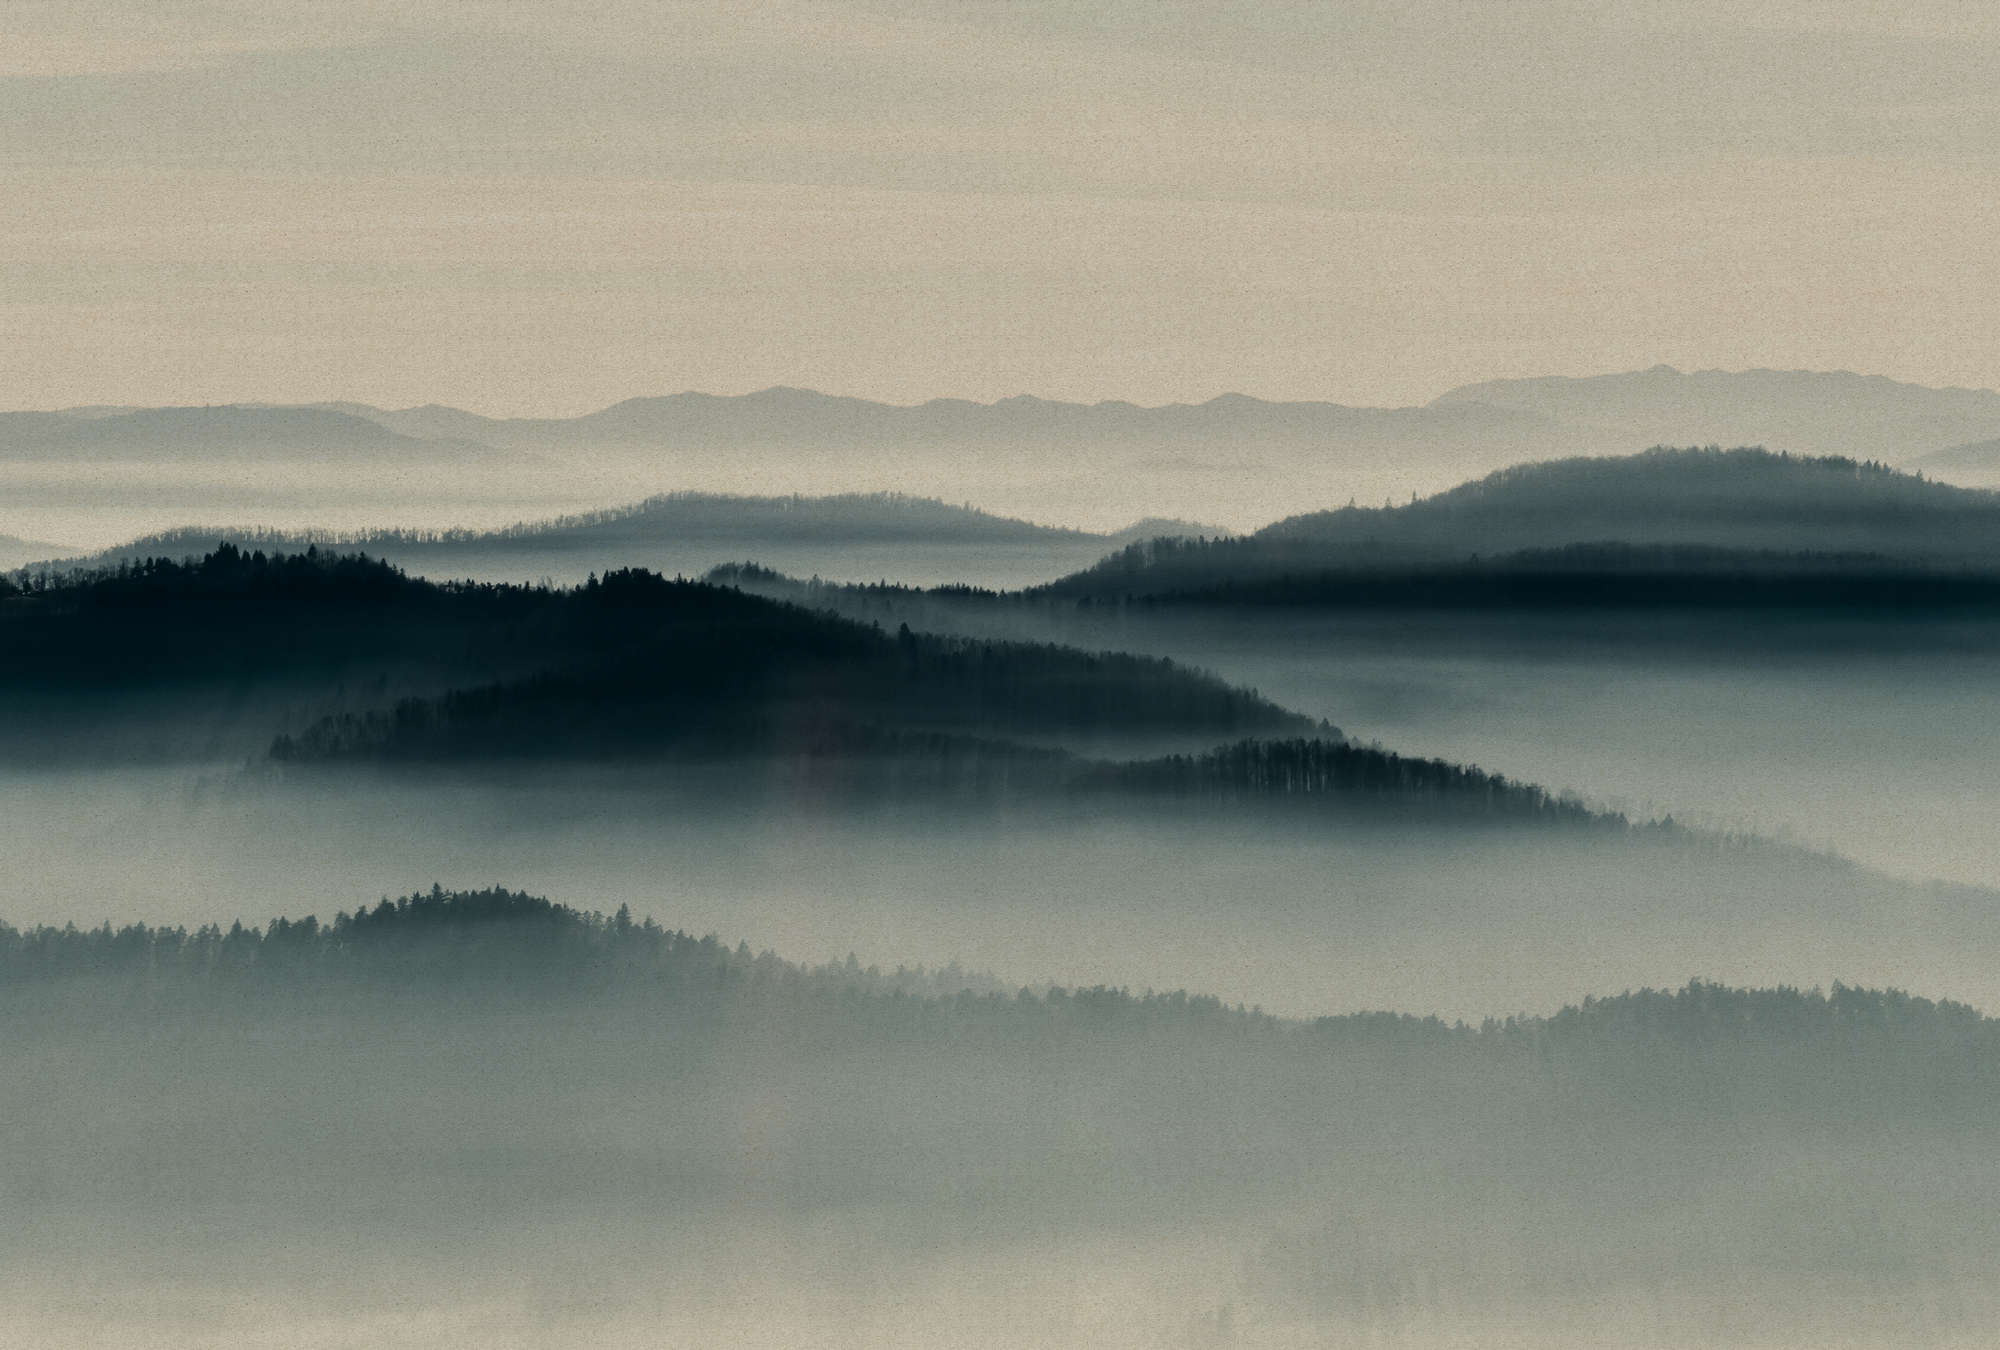             Horizon 1 - Carta da parati paesaggio nebbia, linea cielo natura in texture cartone - Beige, Blu | Premium Smooth Fleece
        